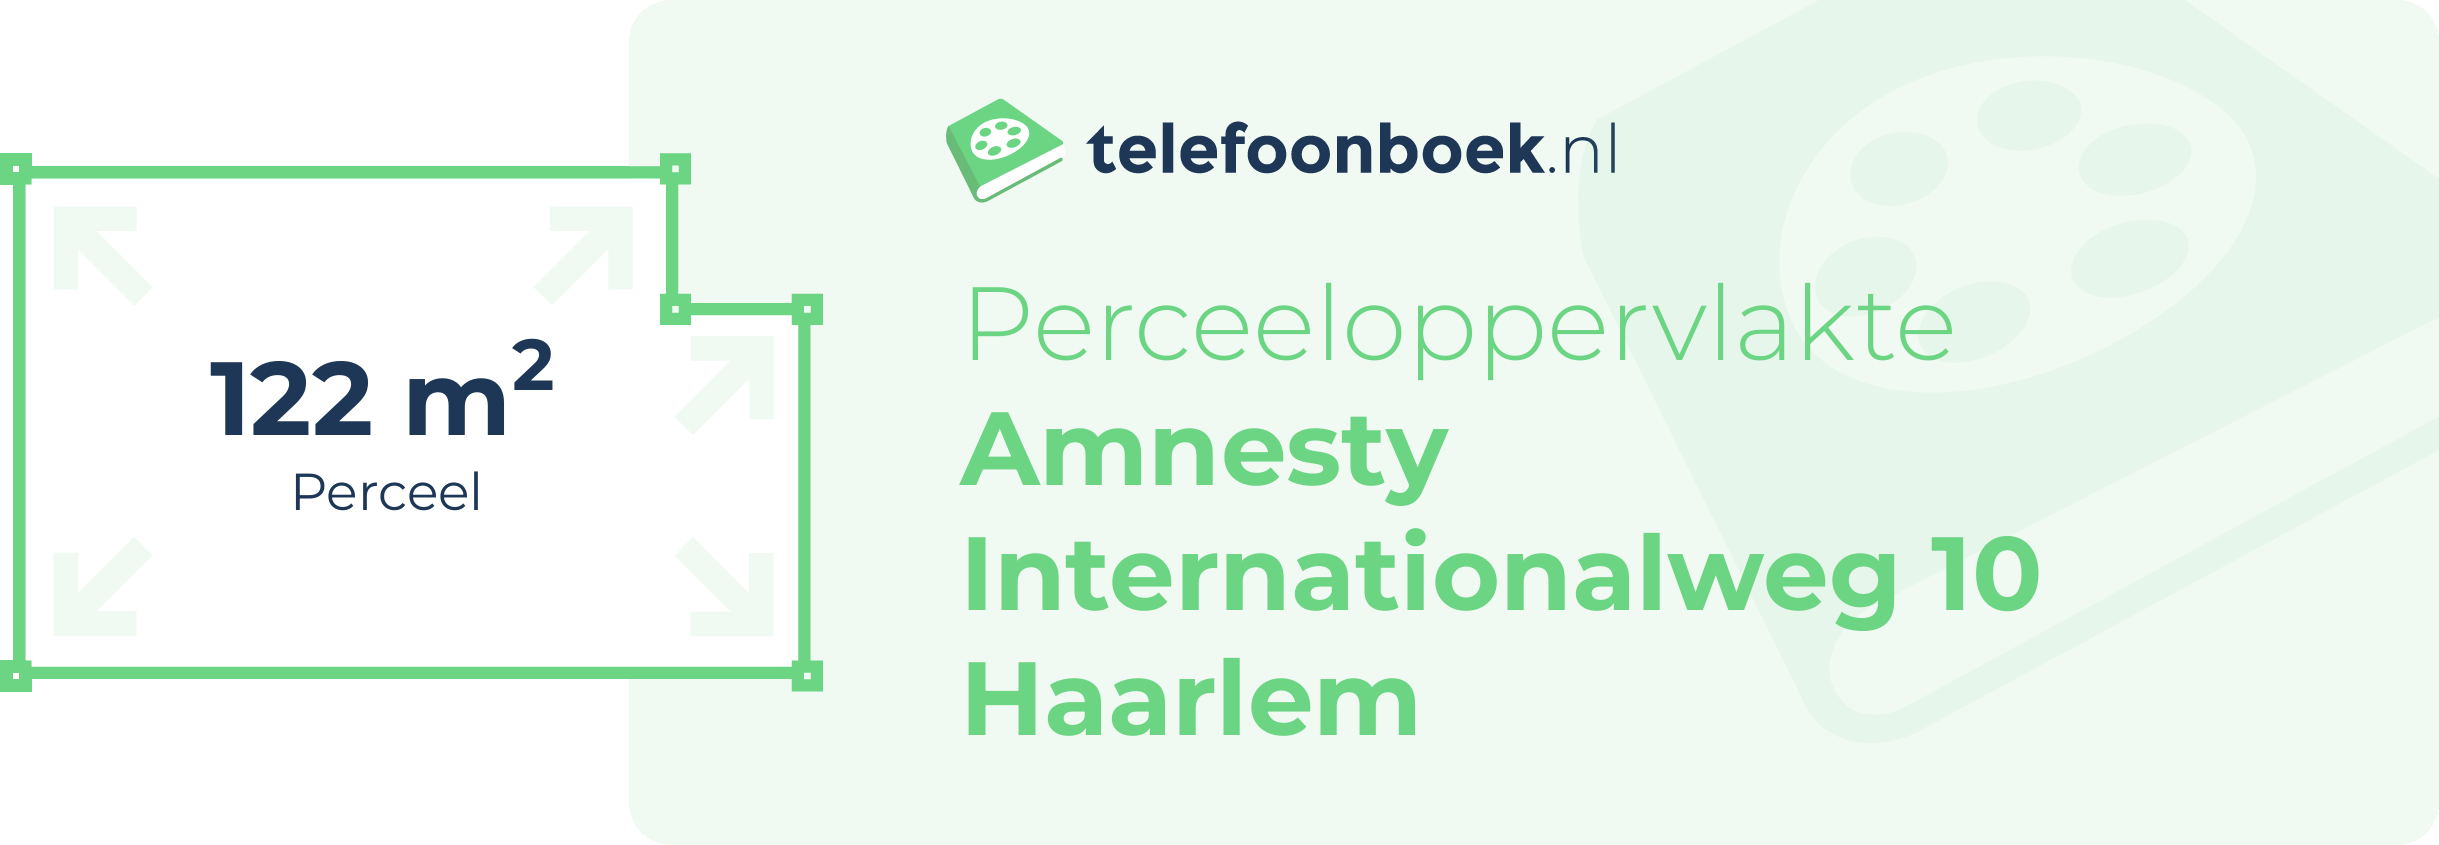 Perceeloppervlakte Amnesty Internationalweg 10 Haarlem